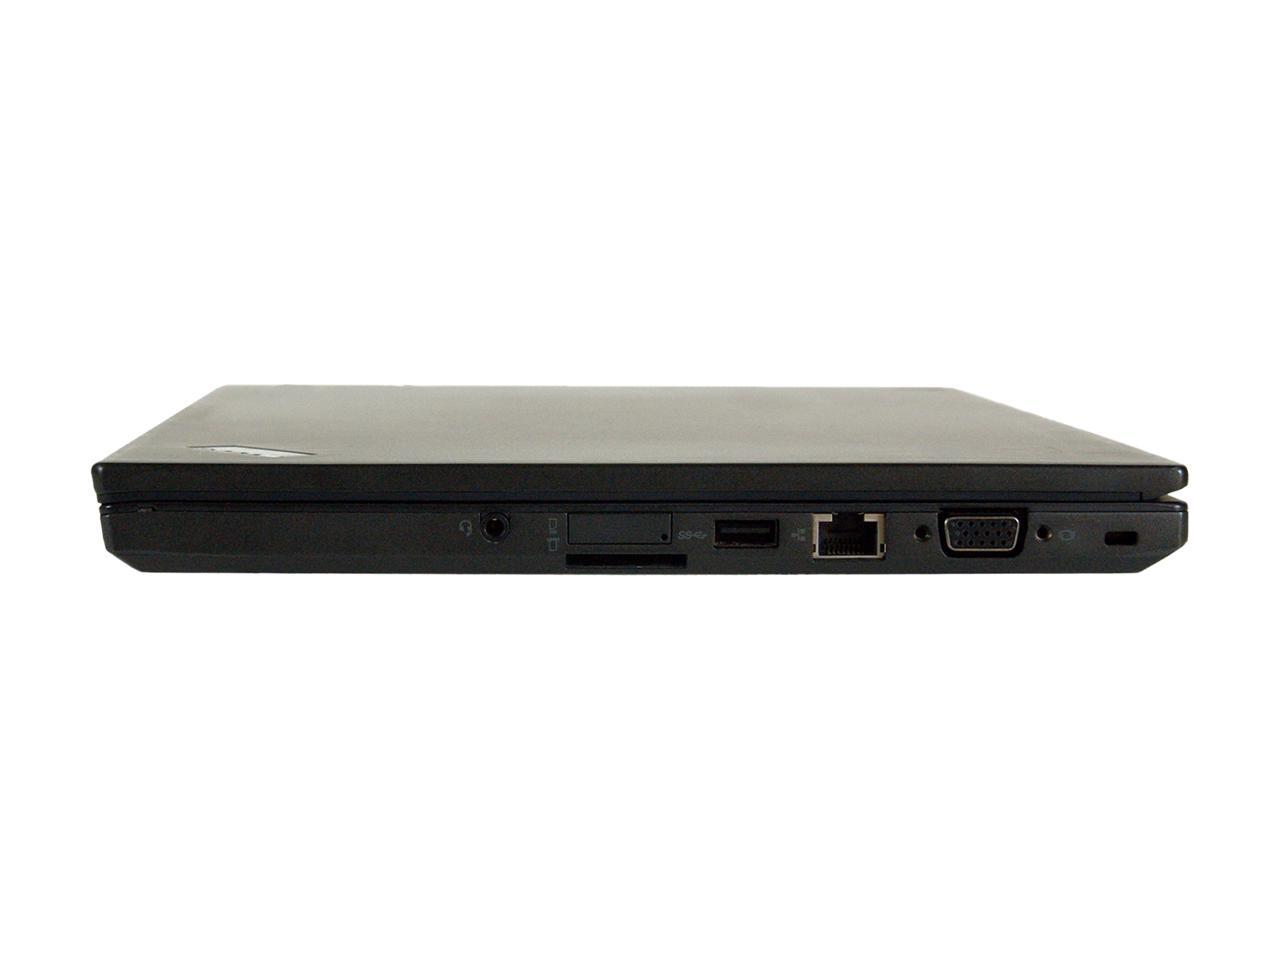 Lenovo Laptop T450 Intel Core i5 5300U (2.30 GHz) 8 GB Memory 128 SSD 14.0" Windows 10